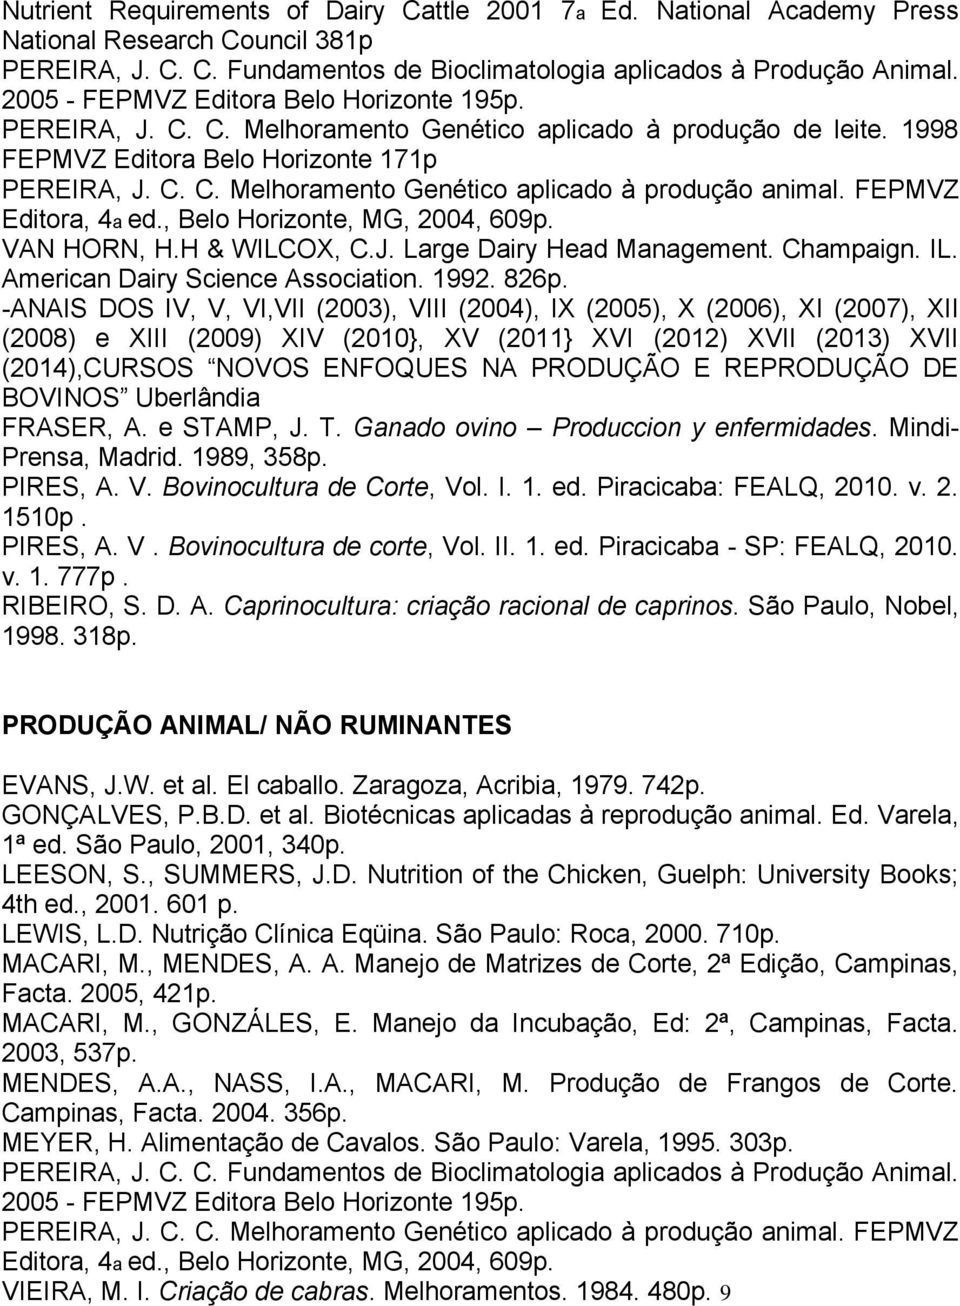 FEPMVZ Editora, 4a ed., Belo Horizonte, MG, 2004, 609p. VAN HORN, H.H & WILCOX, C.J. Large Dairy Head Management. Champaign. IL. American Dairy Science Association. 1992. 826p.